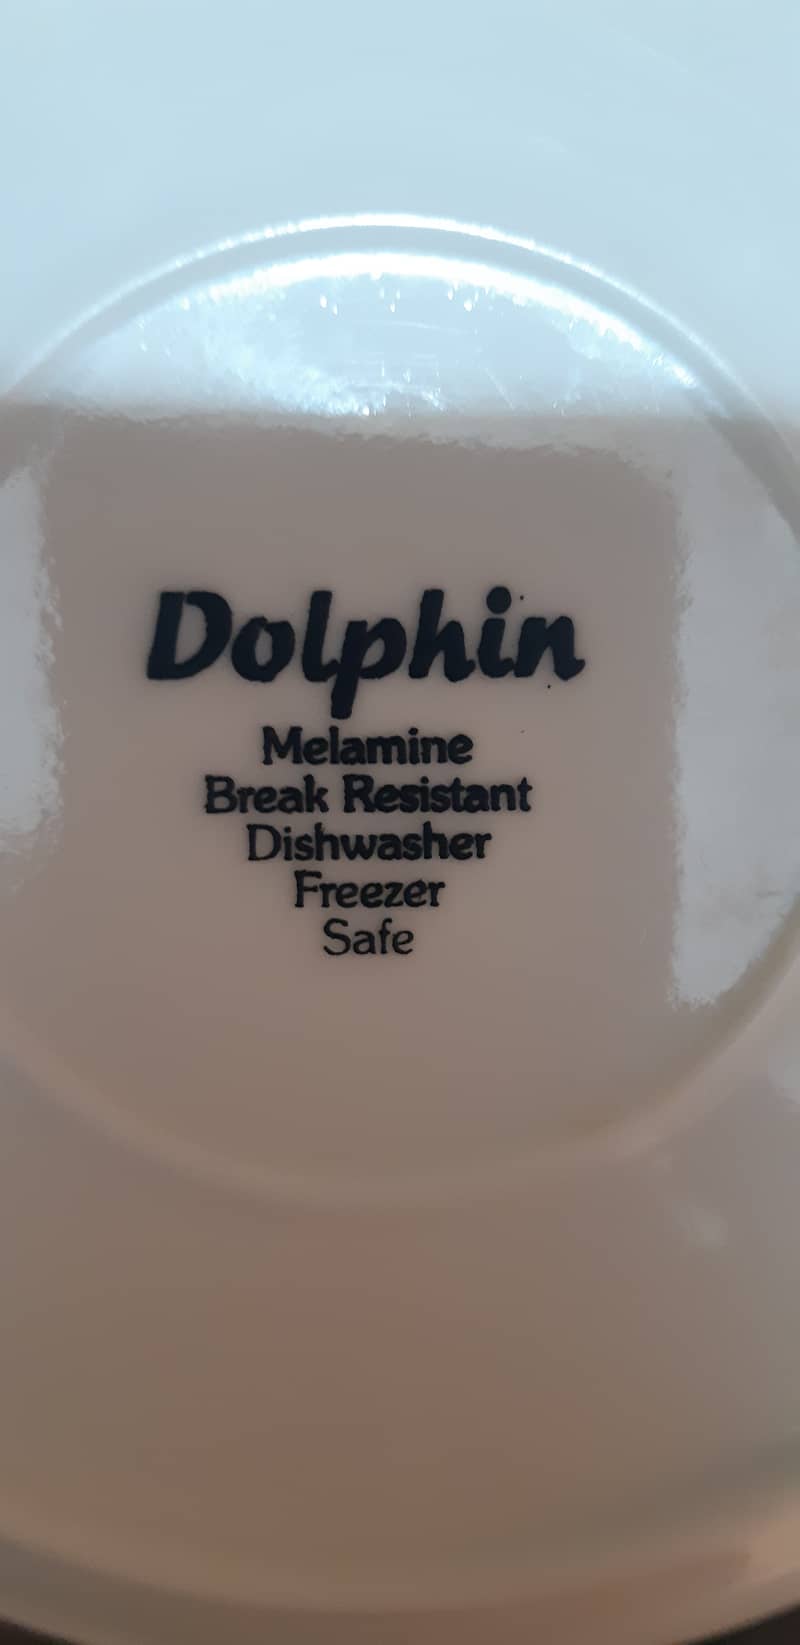 DINNER set made by Dolphin melamine 7